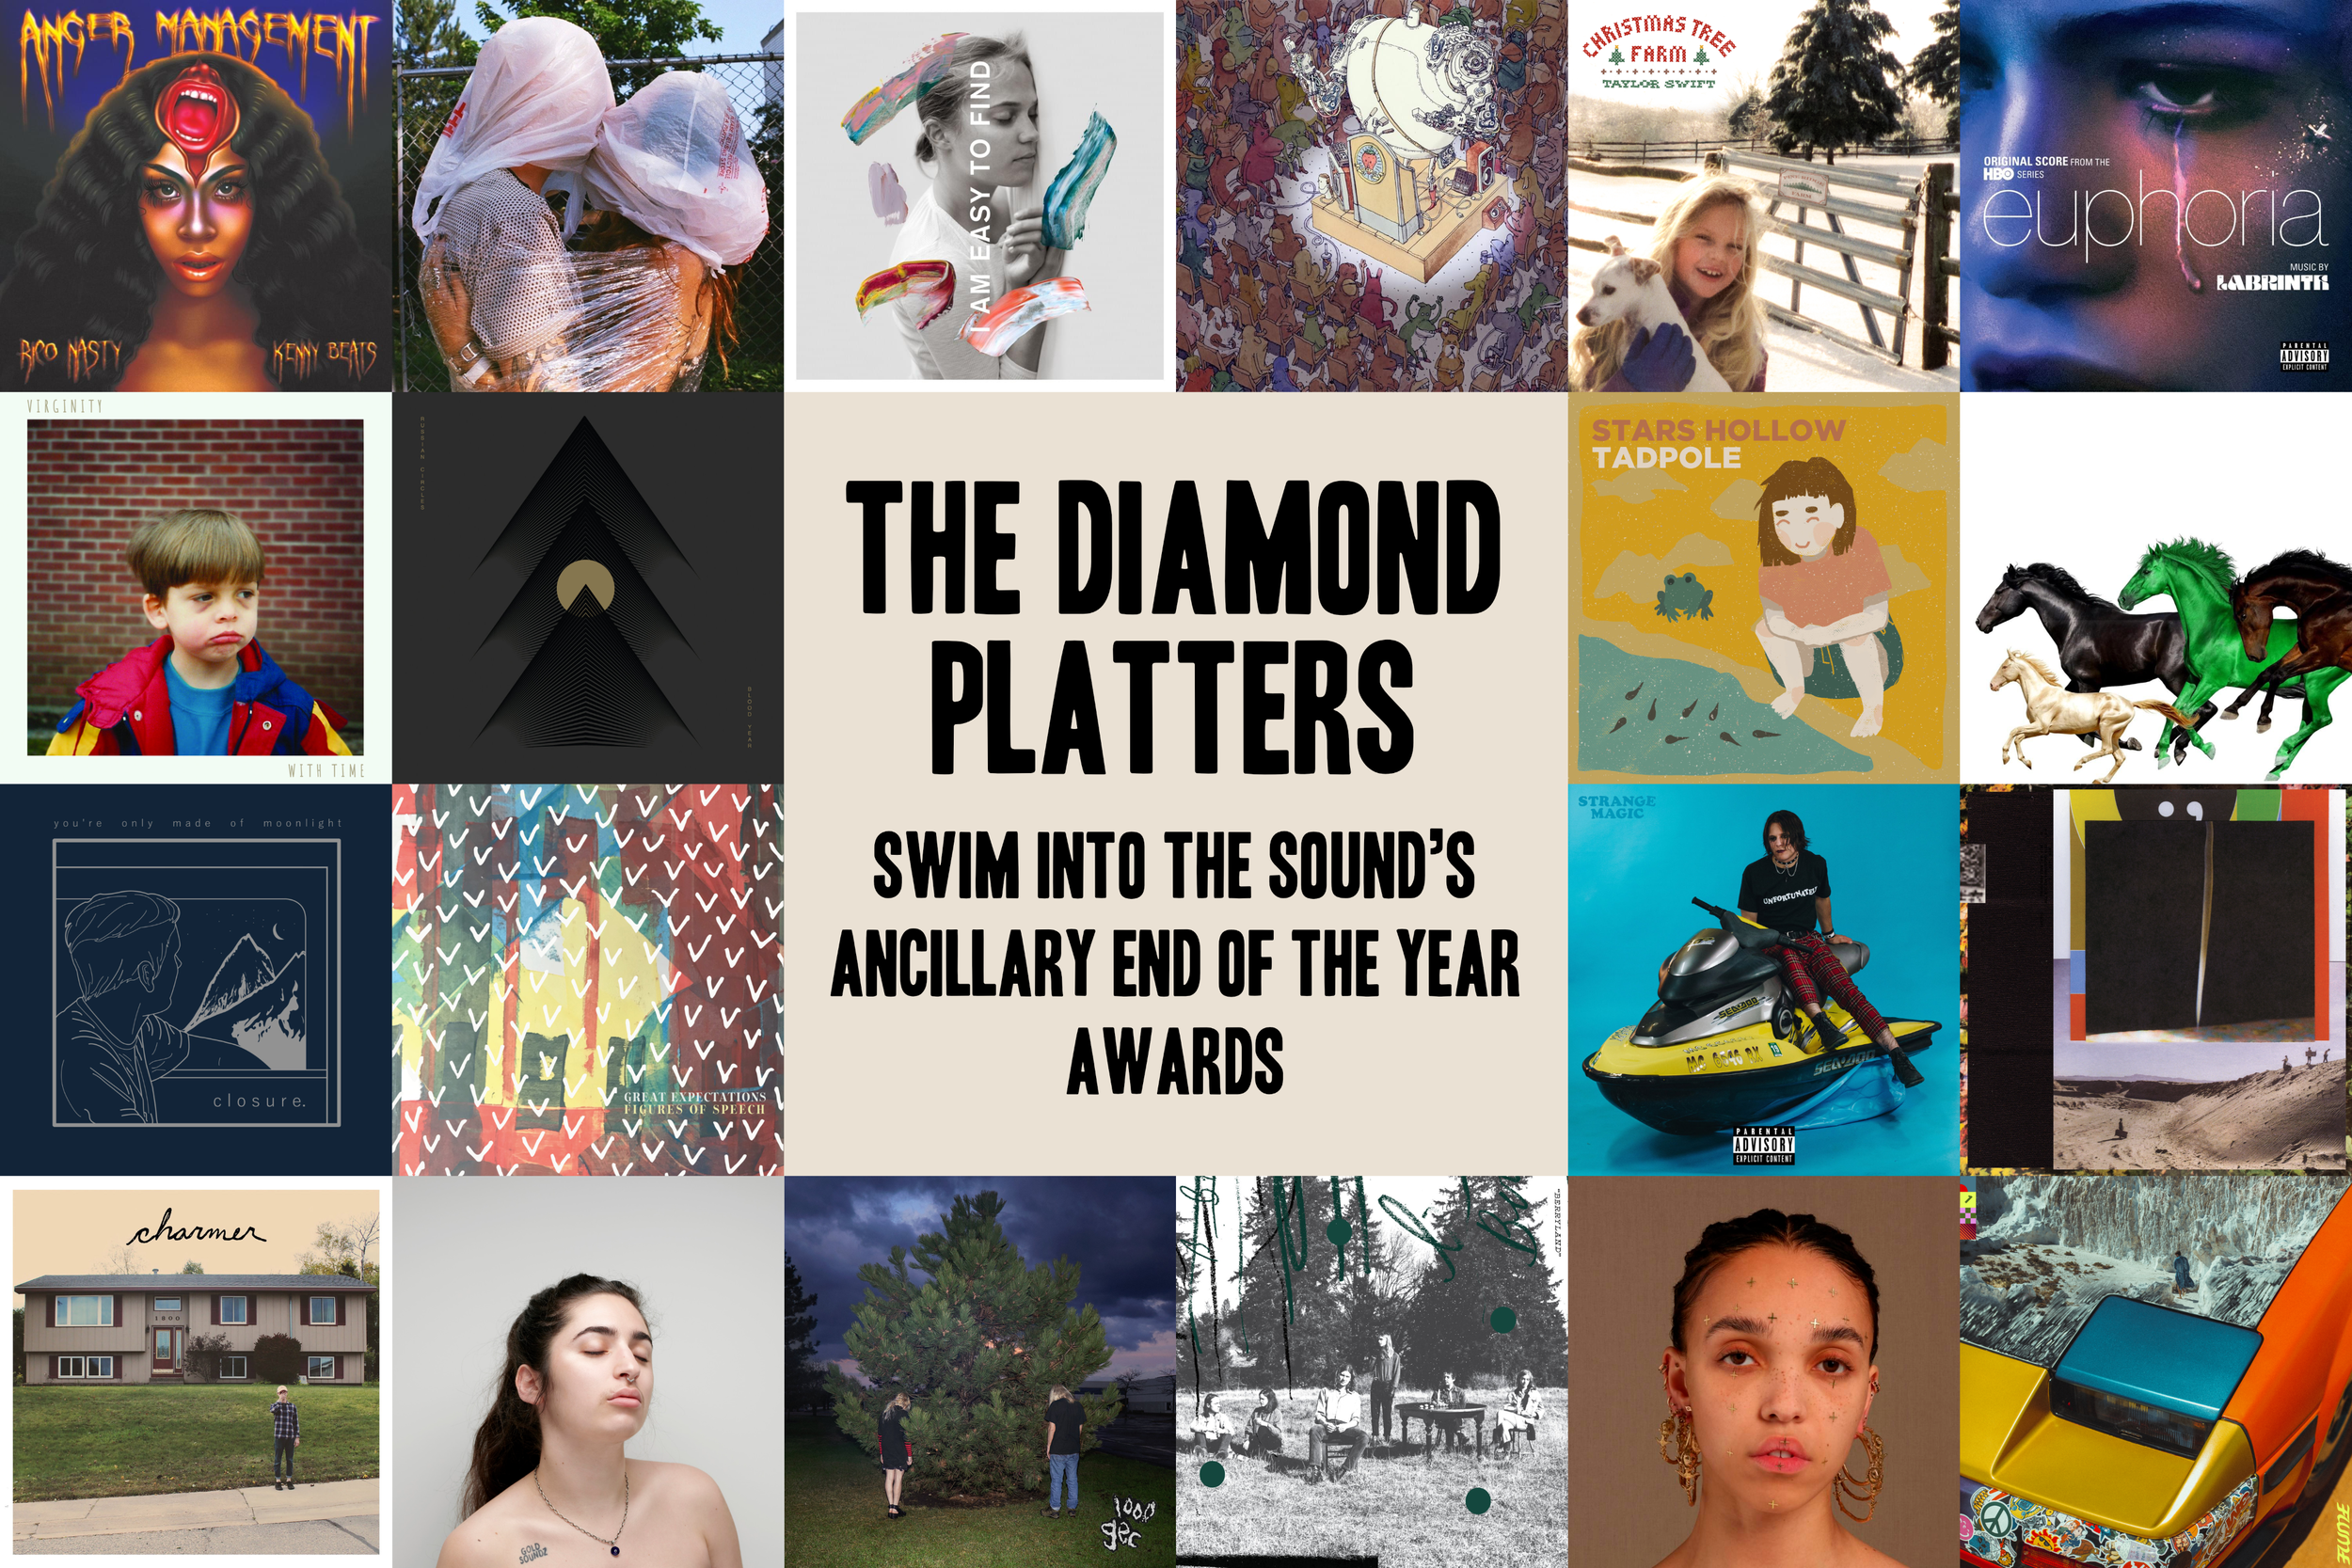 The 2019 Diamond Platters